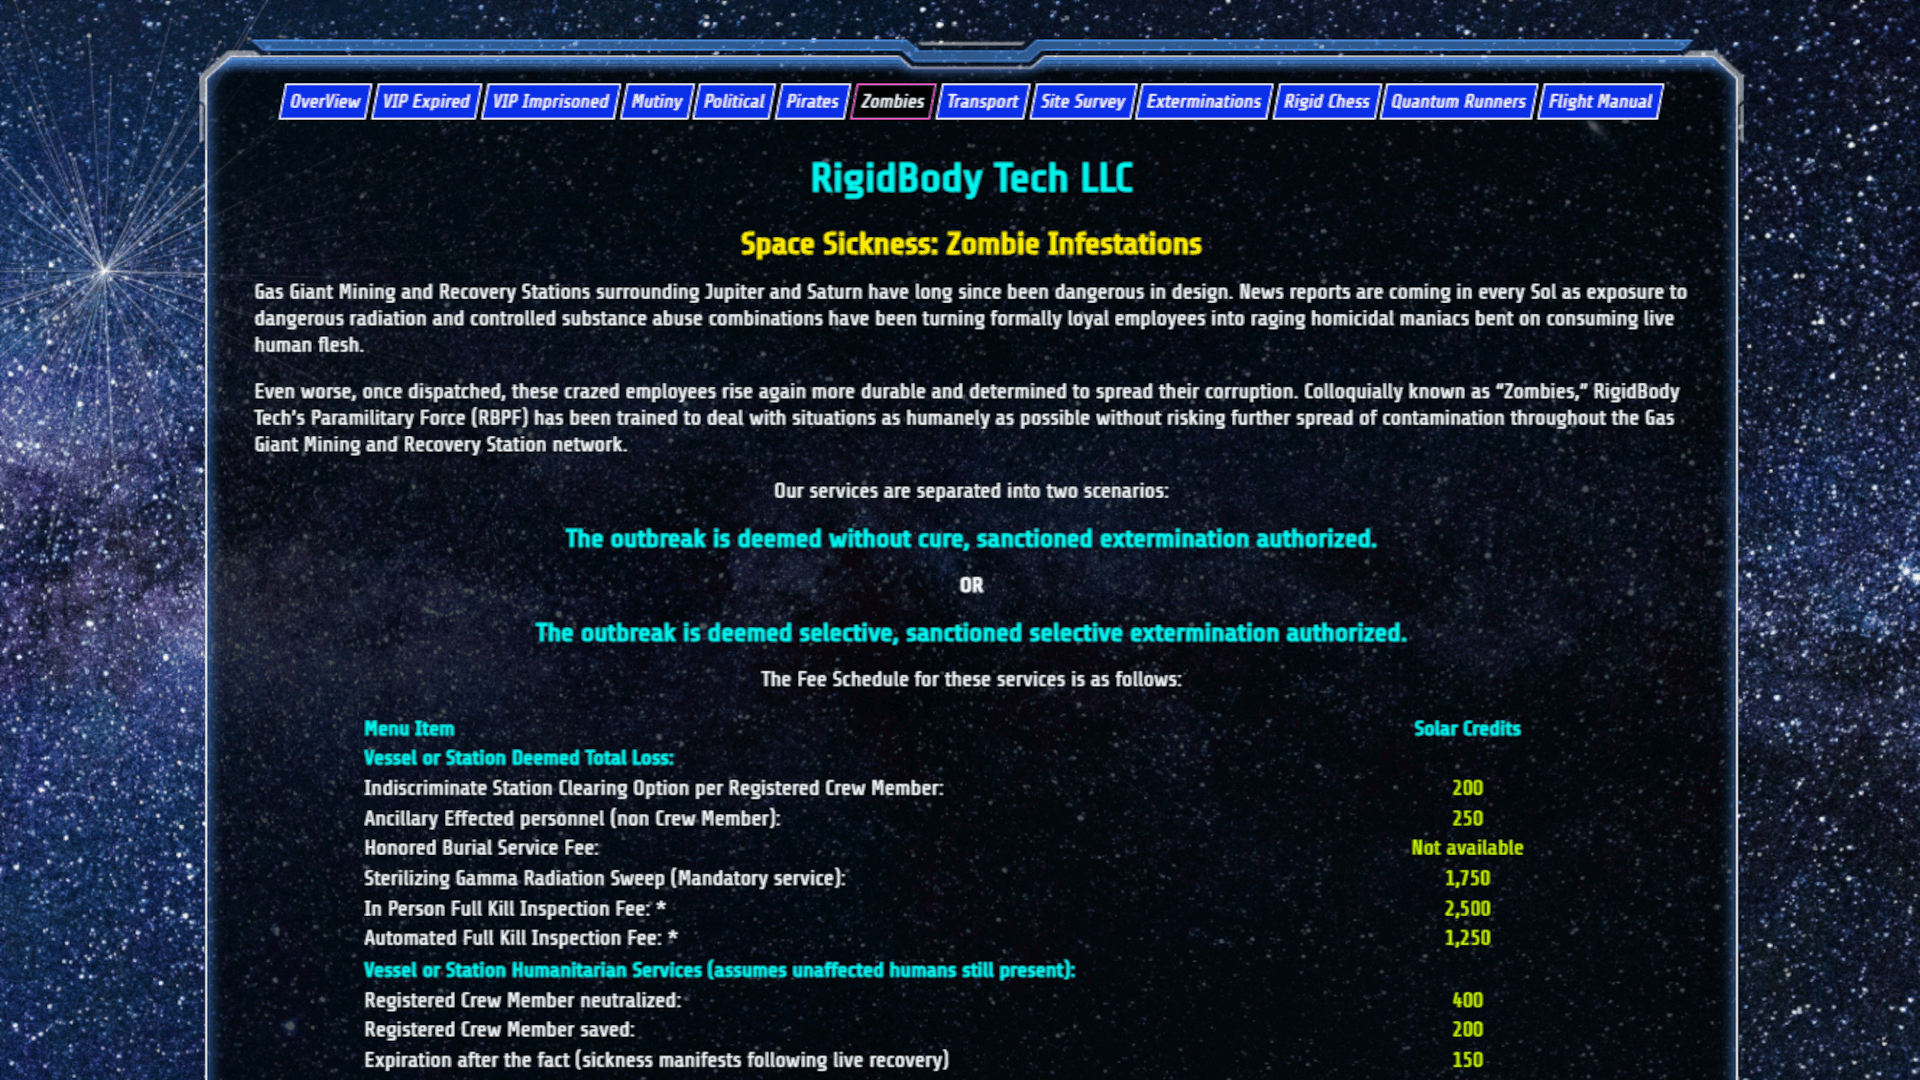 RigidBody Tech LLC